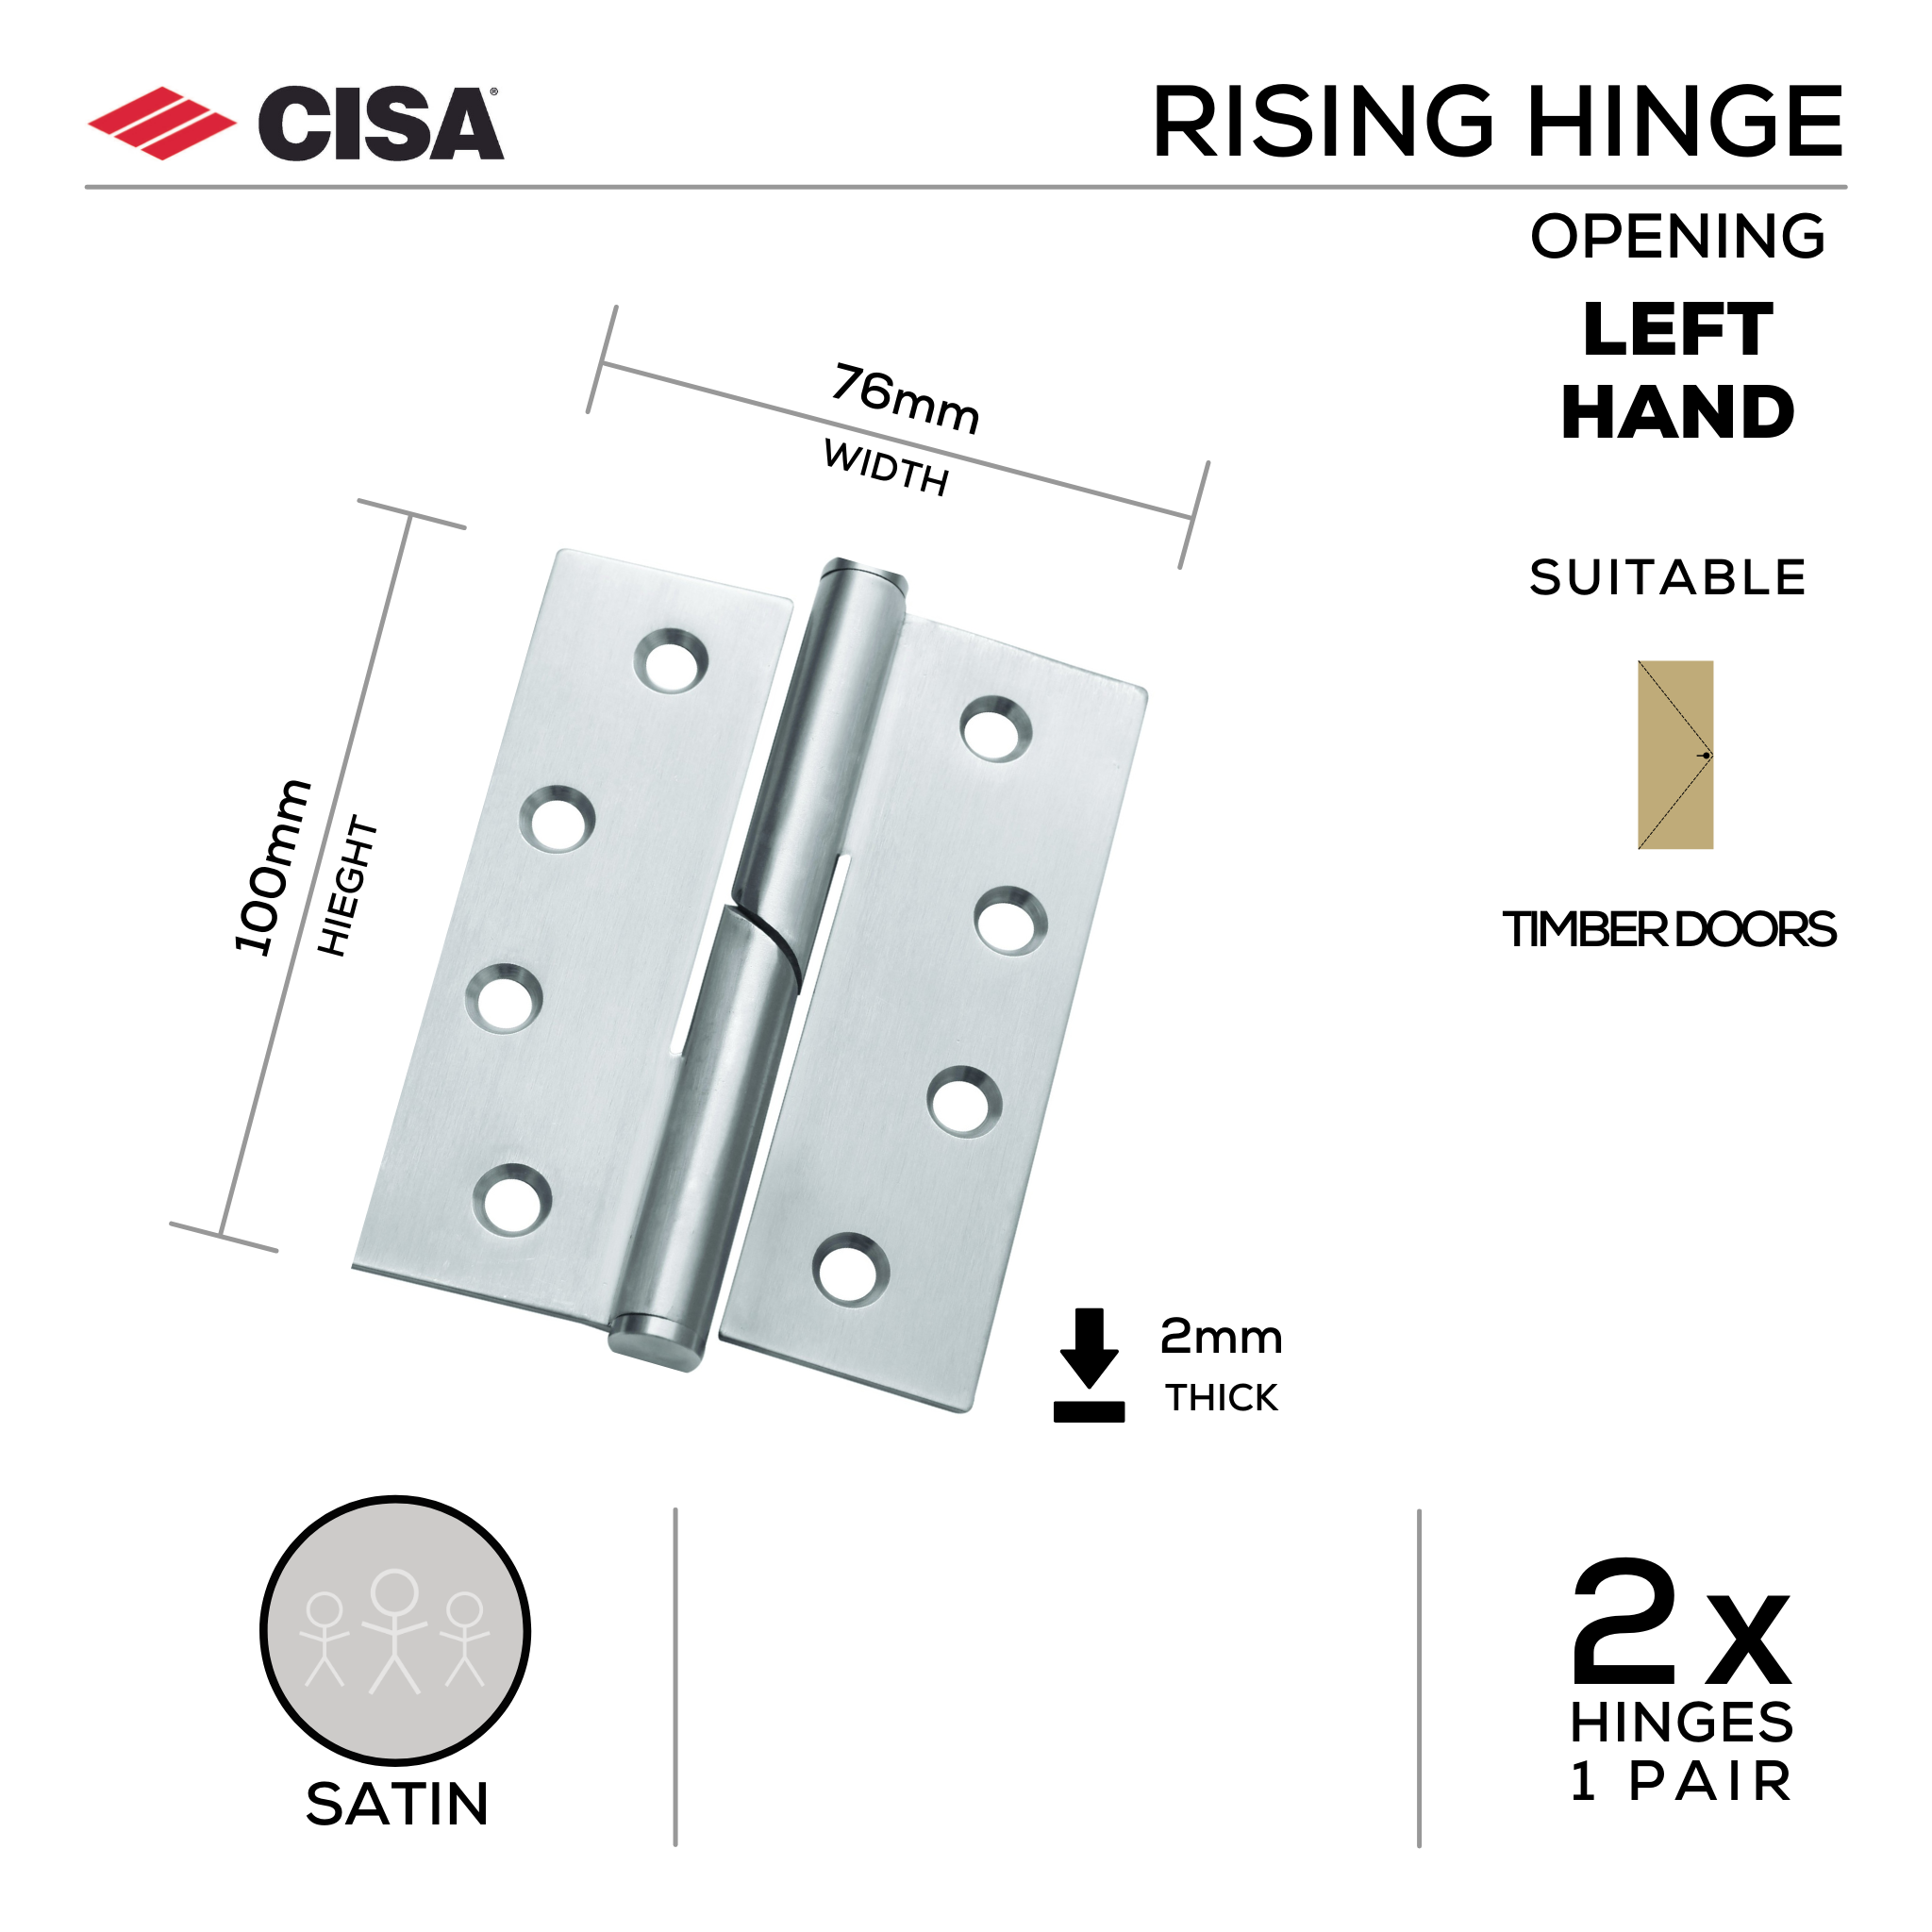 FH76X2RL, Rising Hinge, Lift Off, Left Hand, 2 x Hinges (1 Pair), 100mm (h) x 76mm (w) x 2mm (t), Satin, CISA